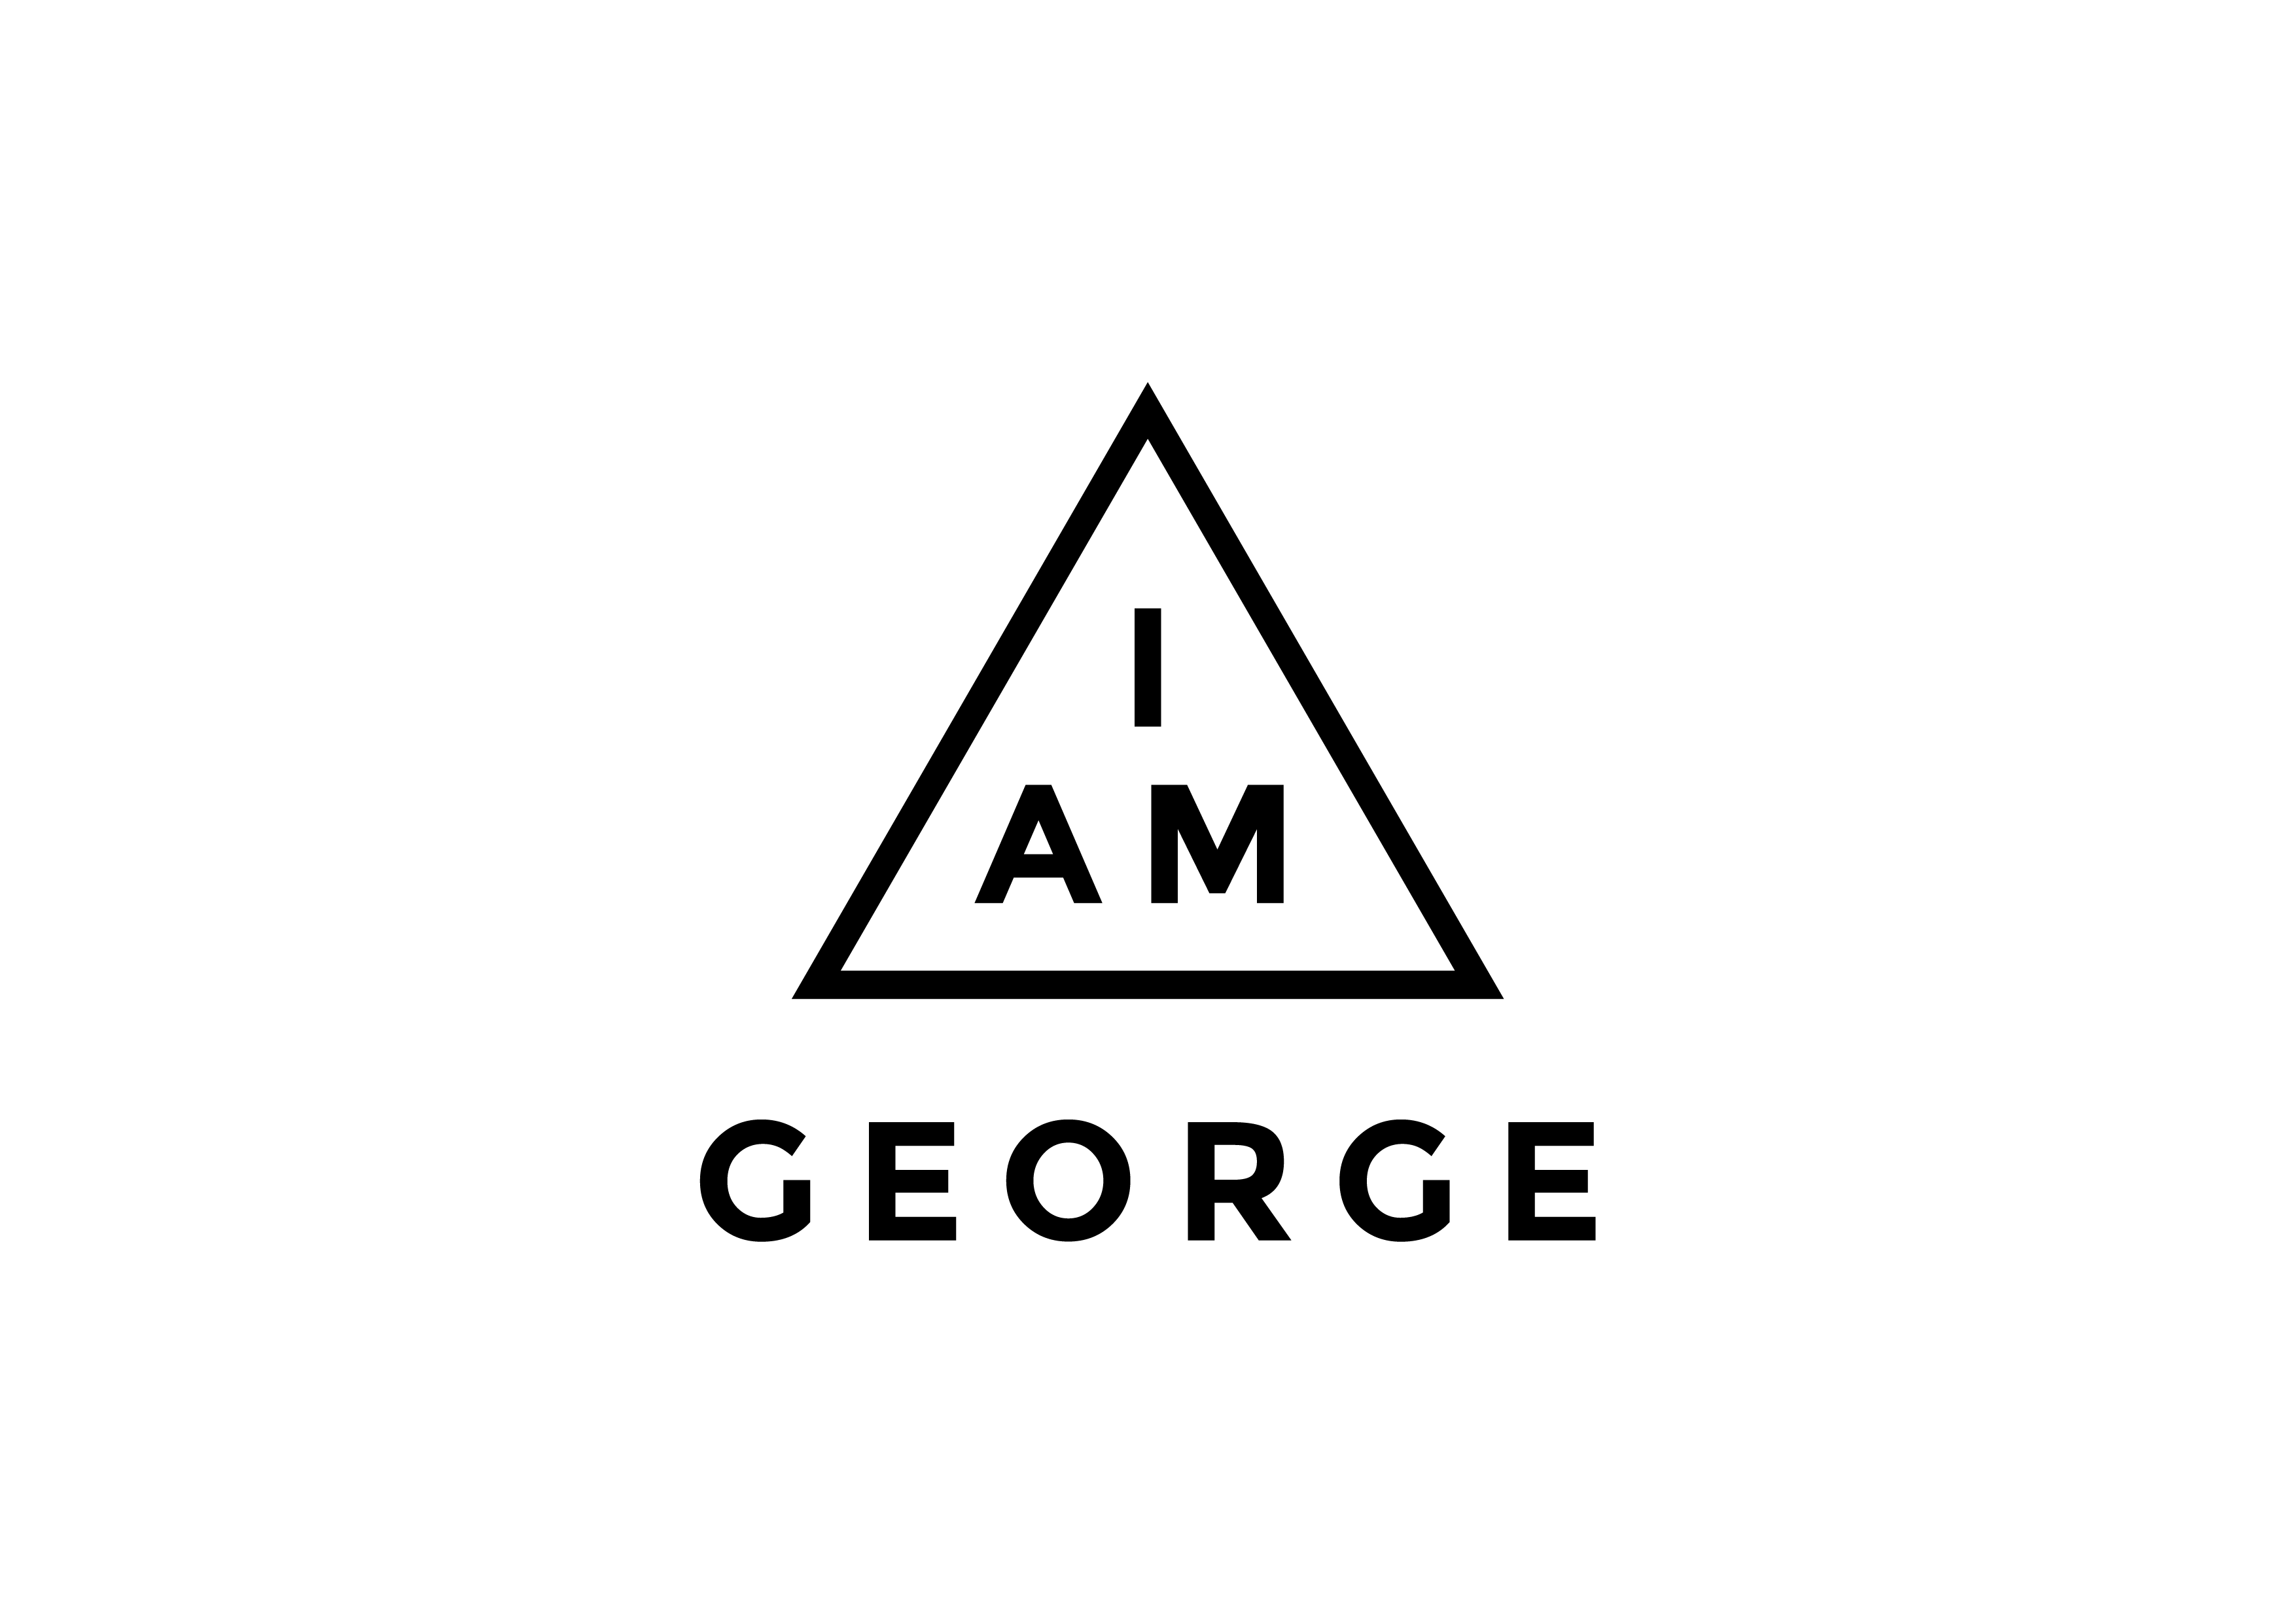 George Logo - I AM GEORGE